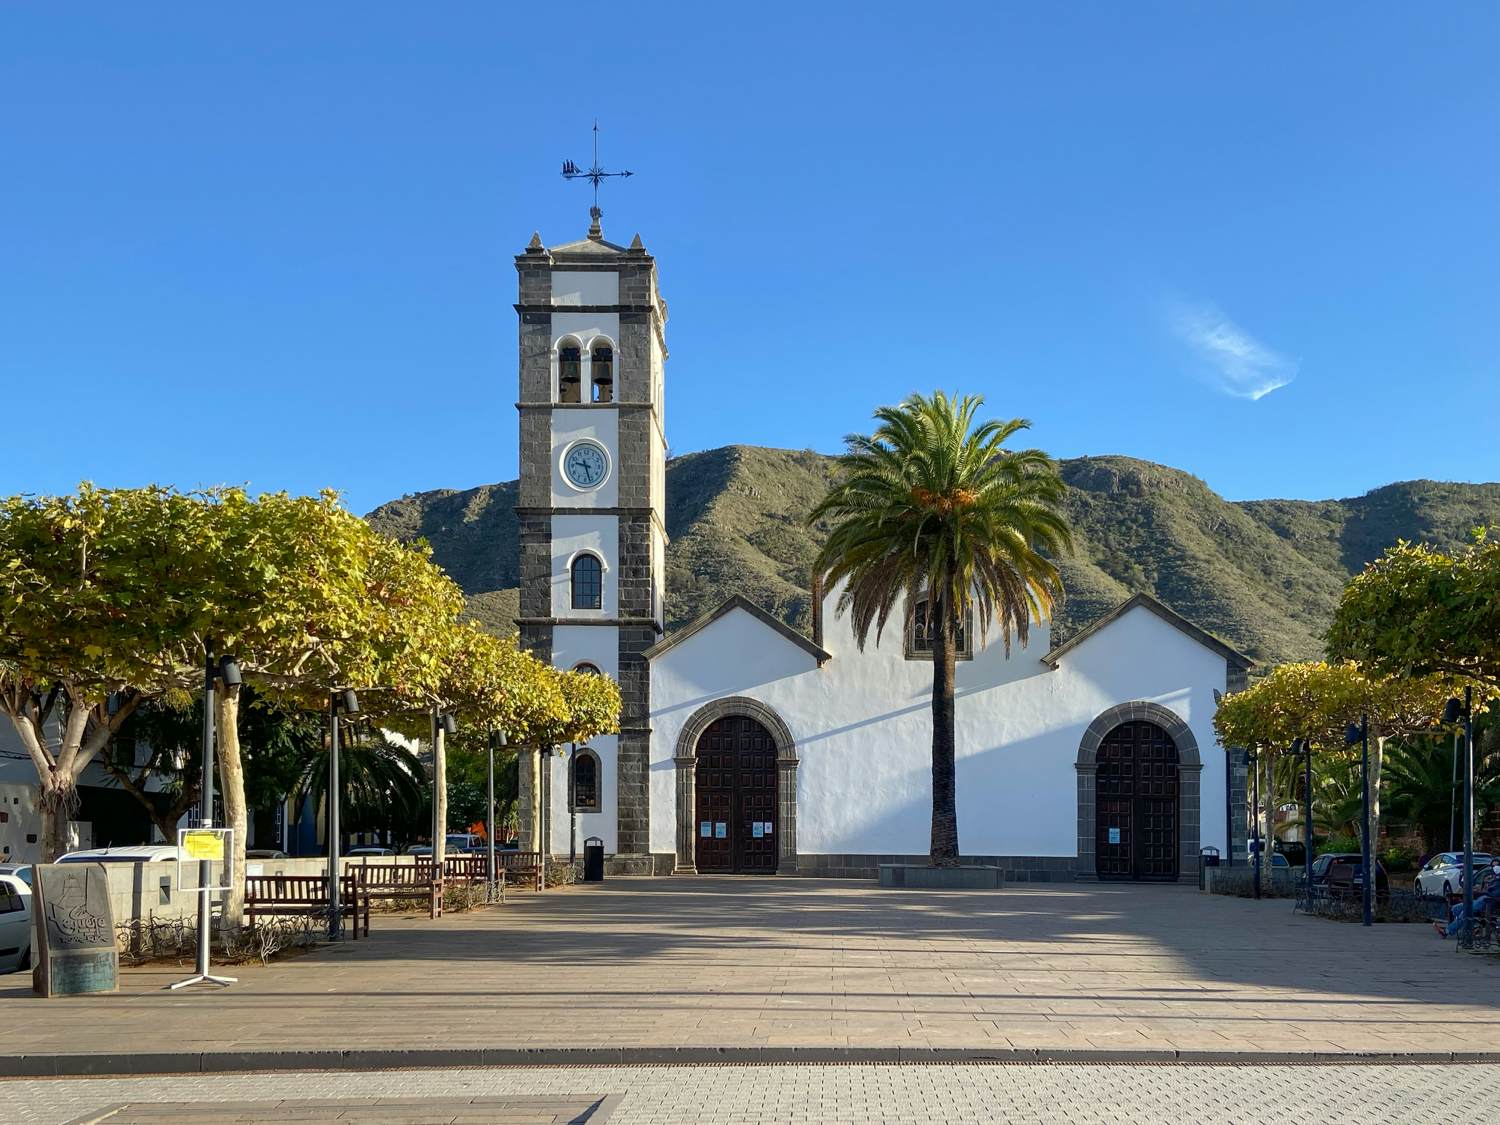 Punto de partida: Plaza de la Iglesia (Plaza San Marcos) de Tegueste